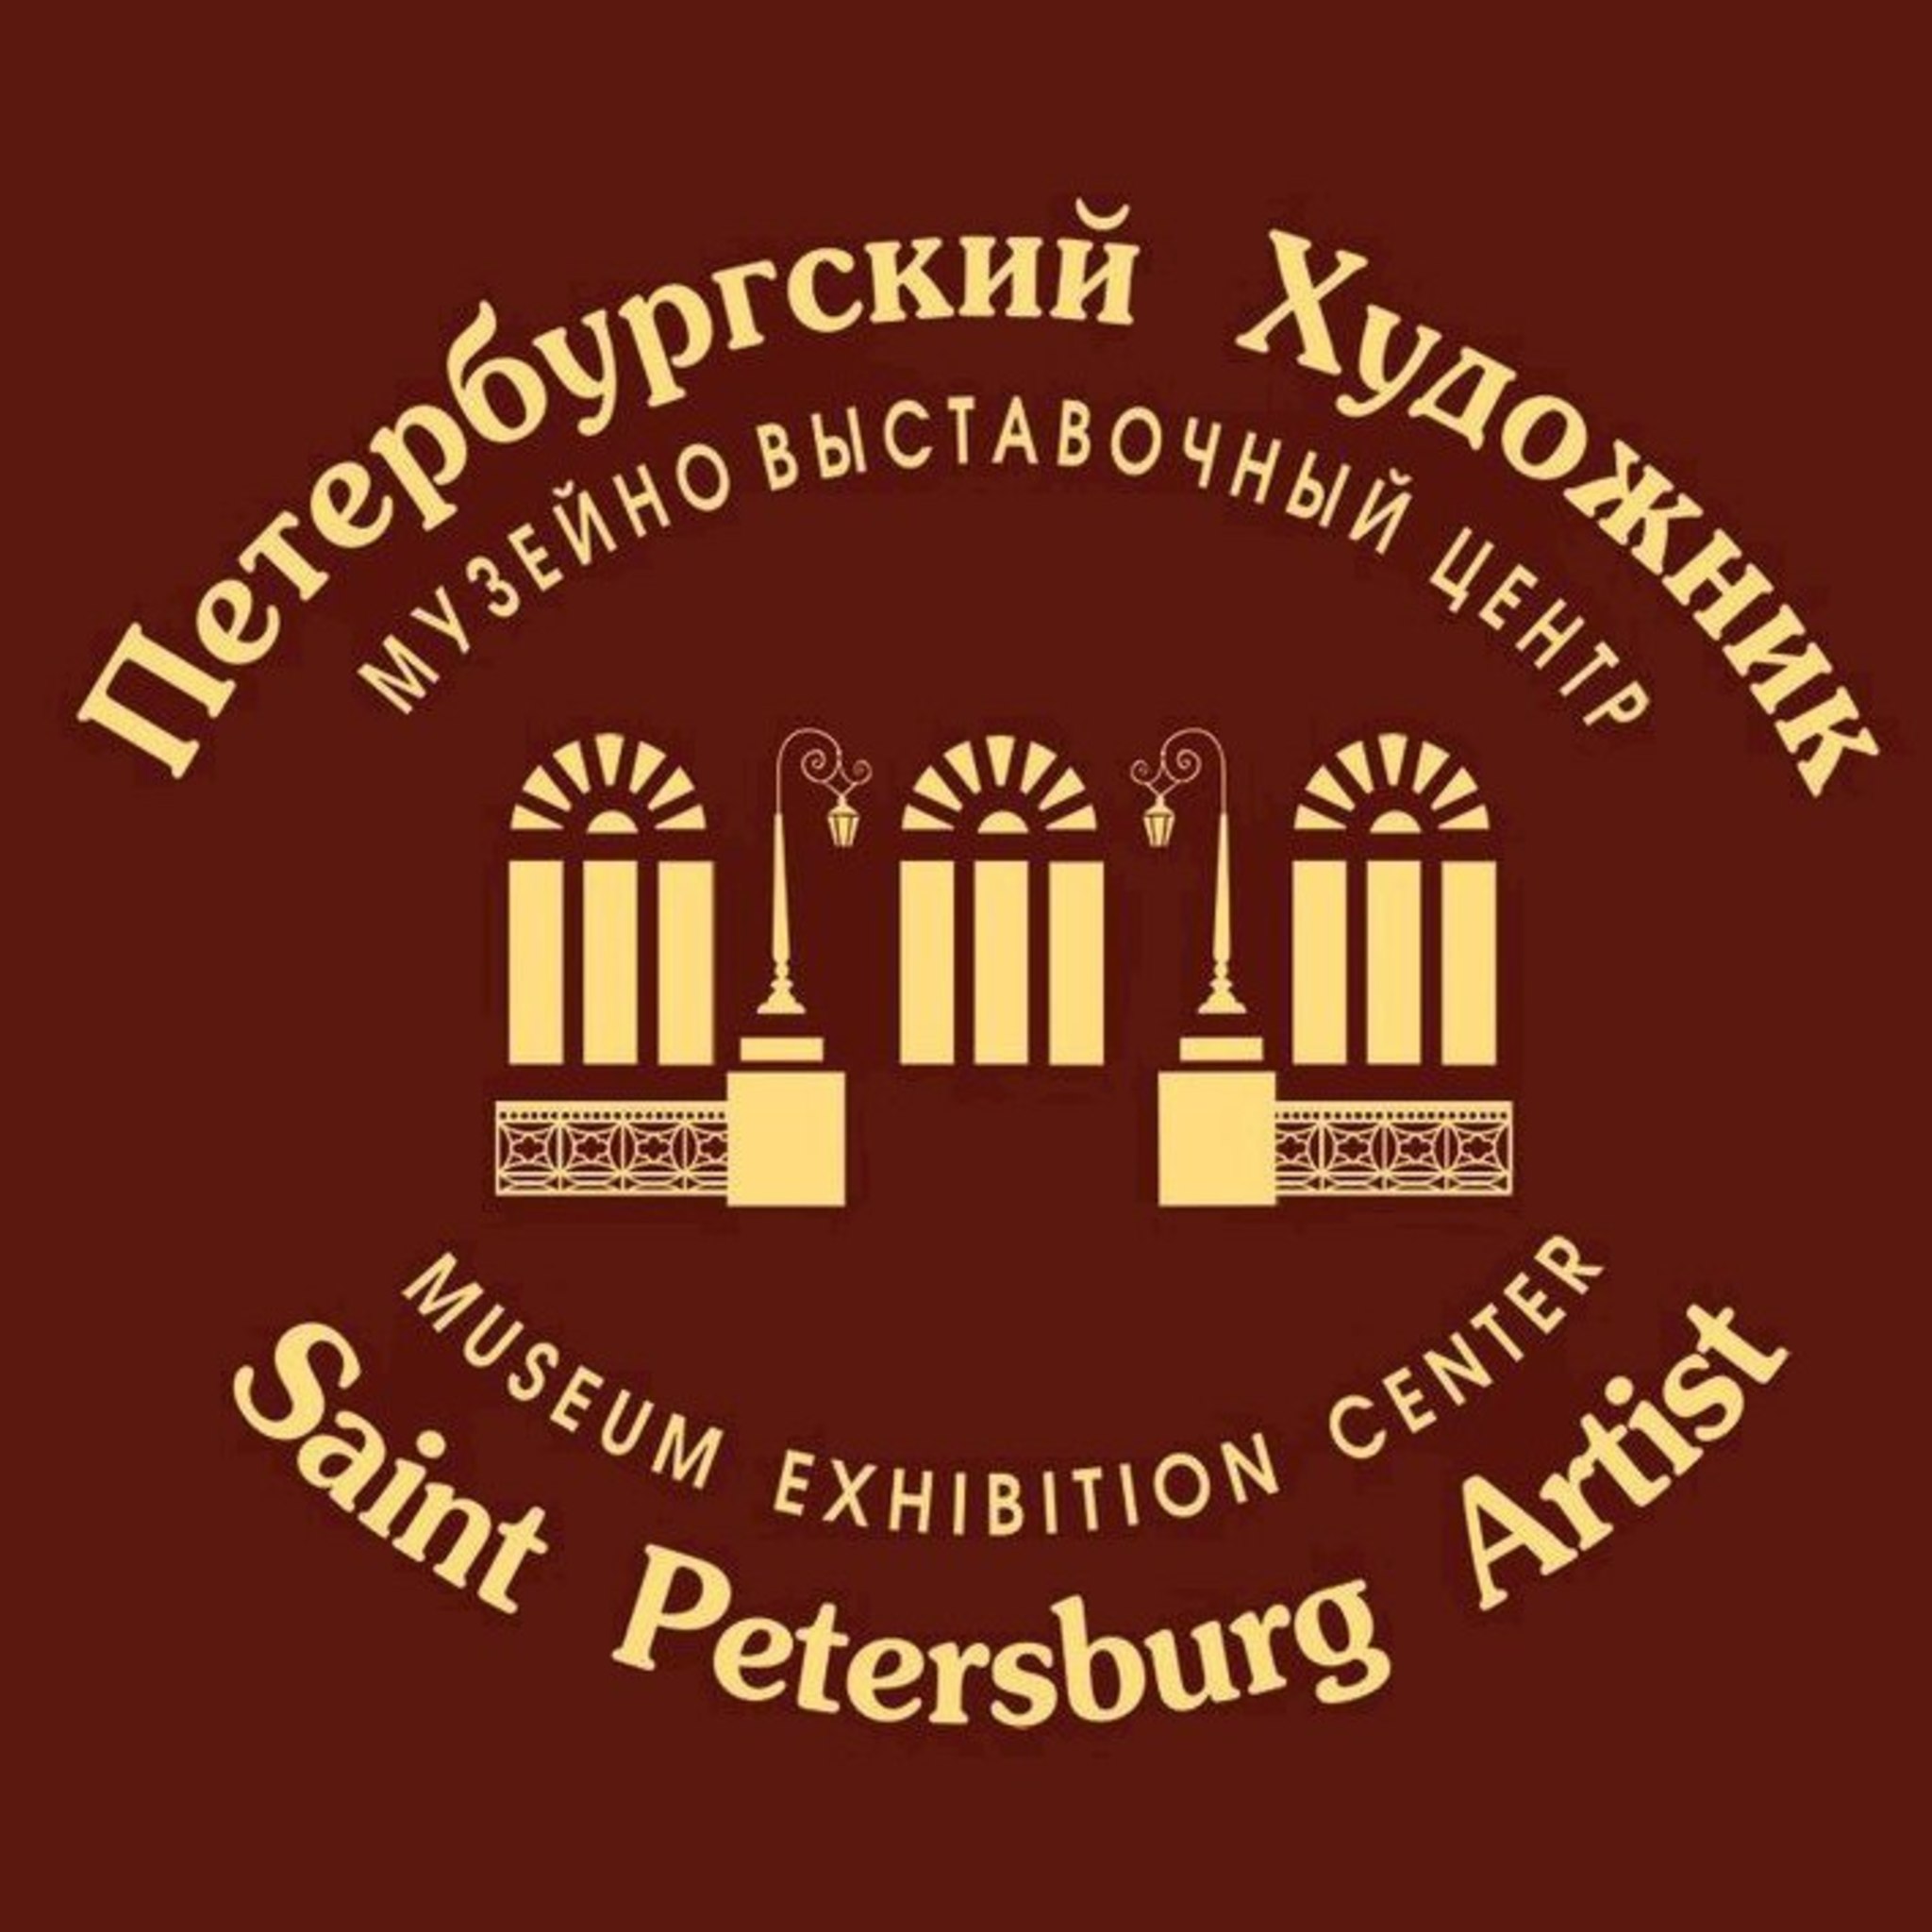 Museum-exhibition Center of the St. Petersburg Artist